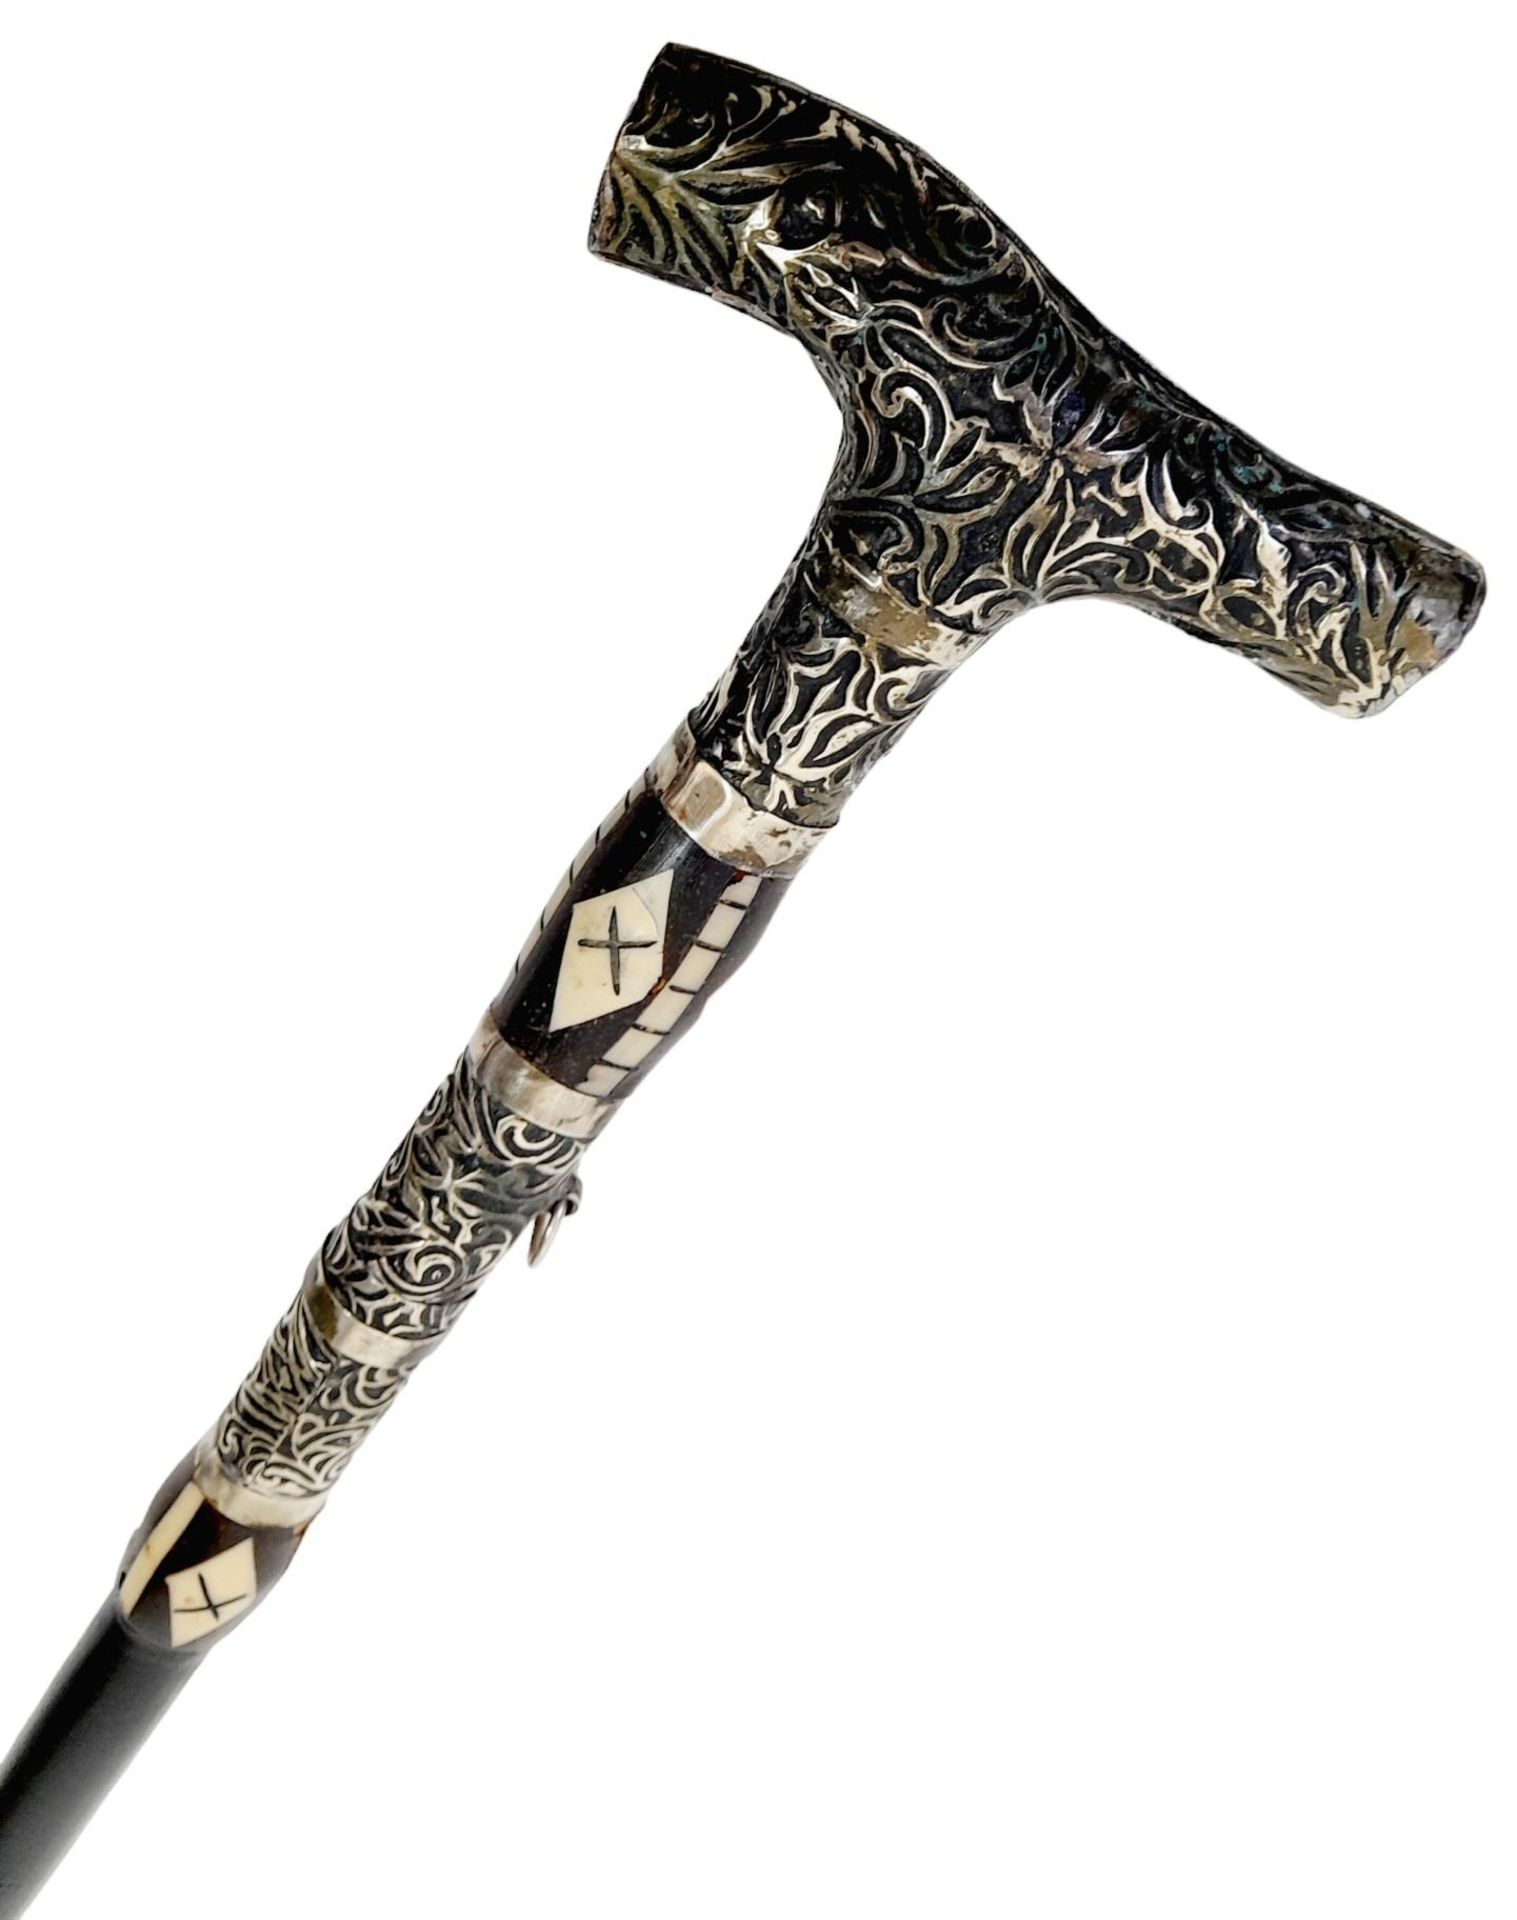 A Very Rare, Unique & Ornate Antique Bone Inlaid Wood and White Metal Sword Stick. 91cm Length. - Image 5 of 5